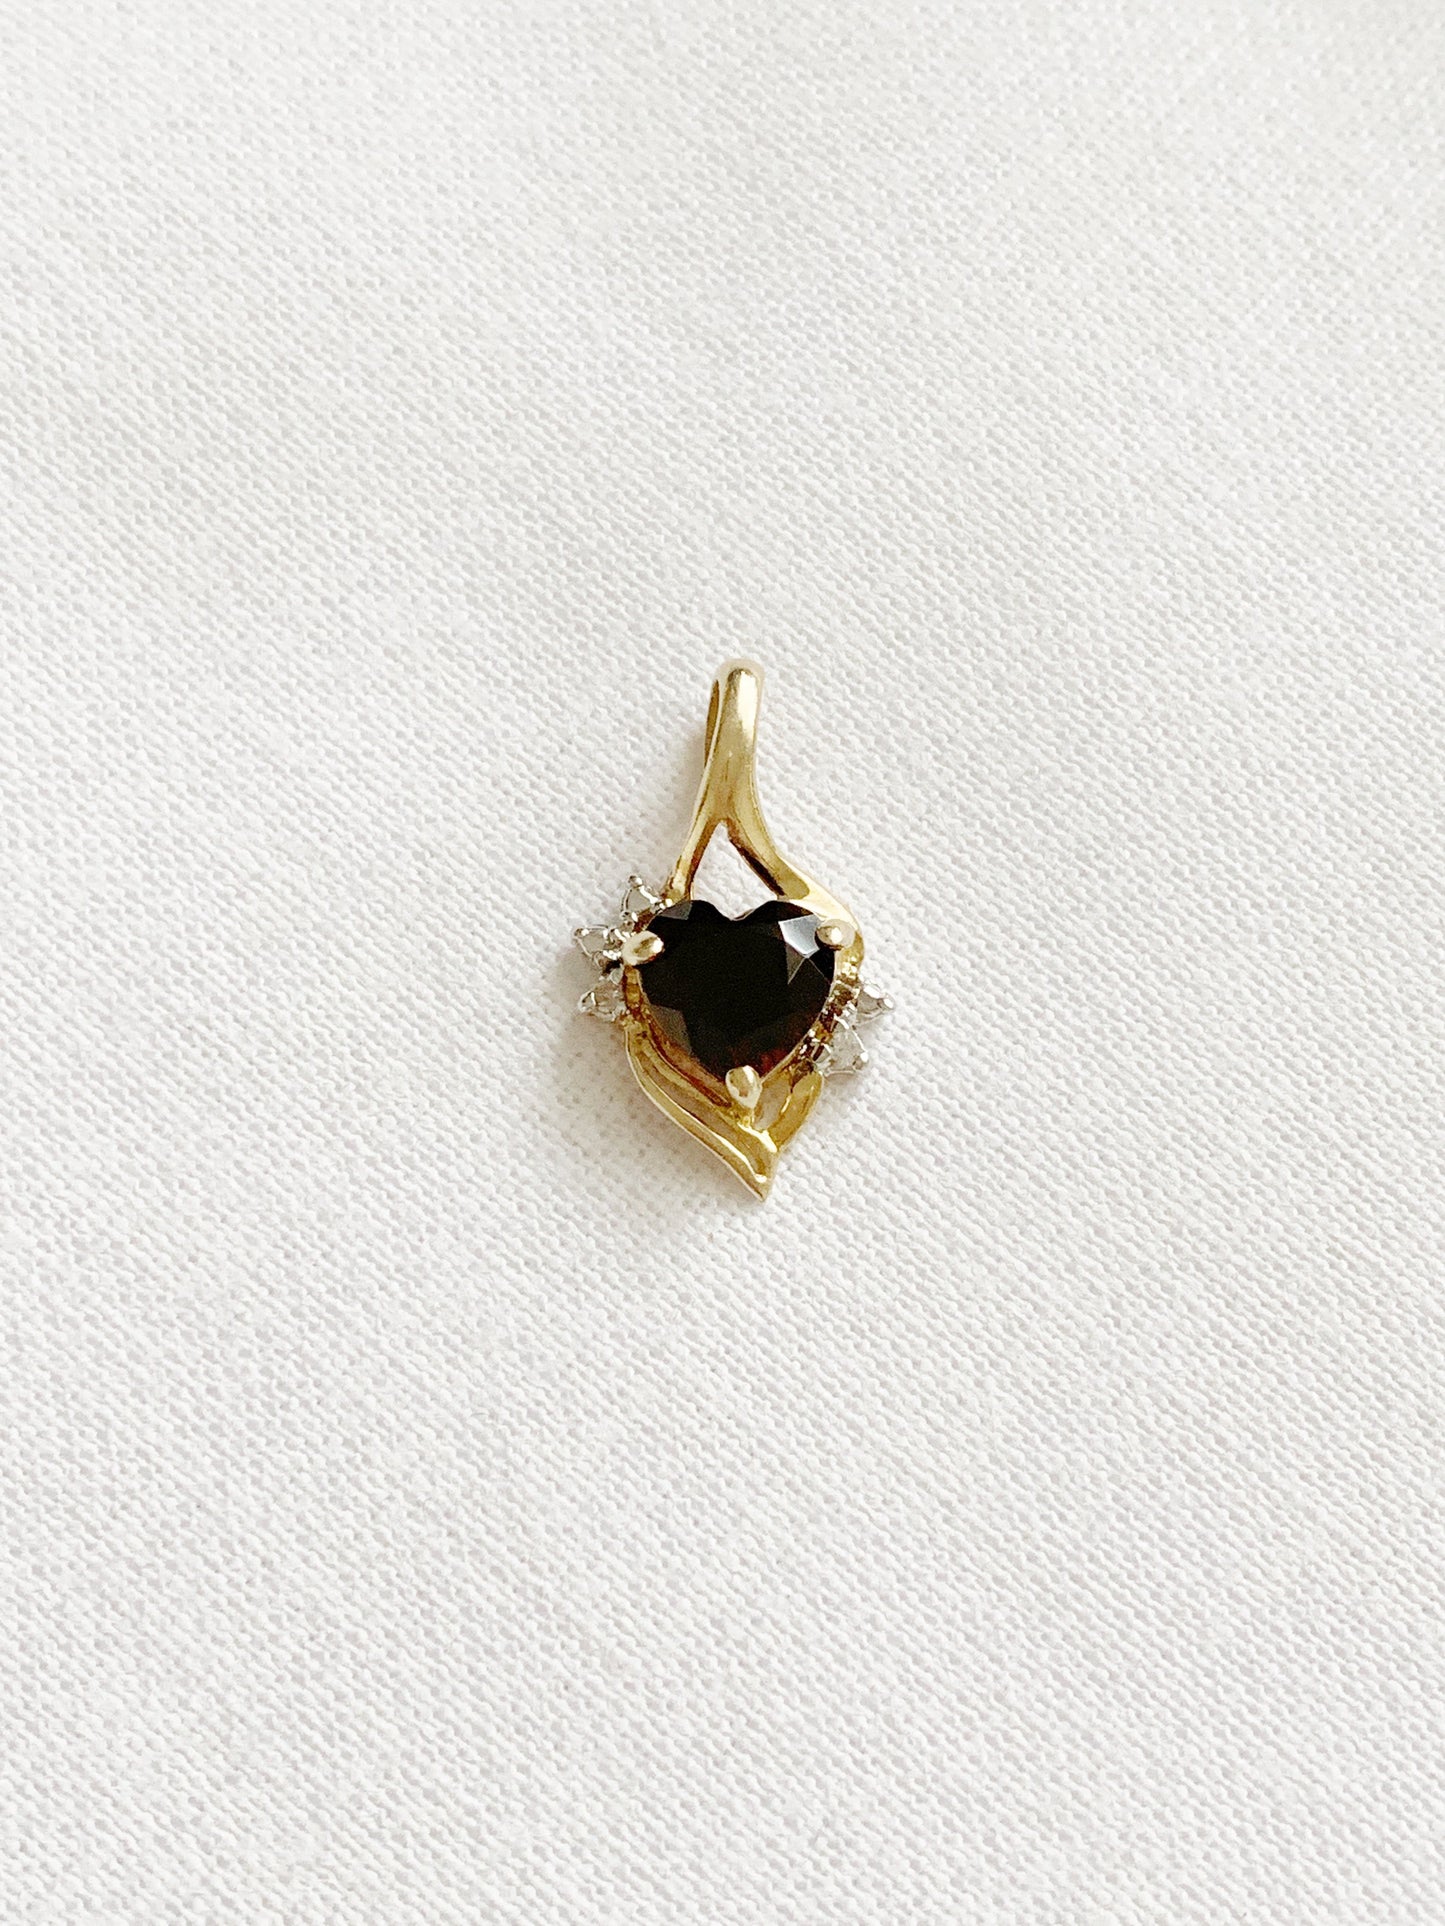 Vintage 9ct Gold Garnet and Diamond Pendant